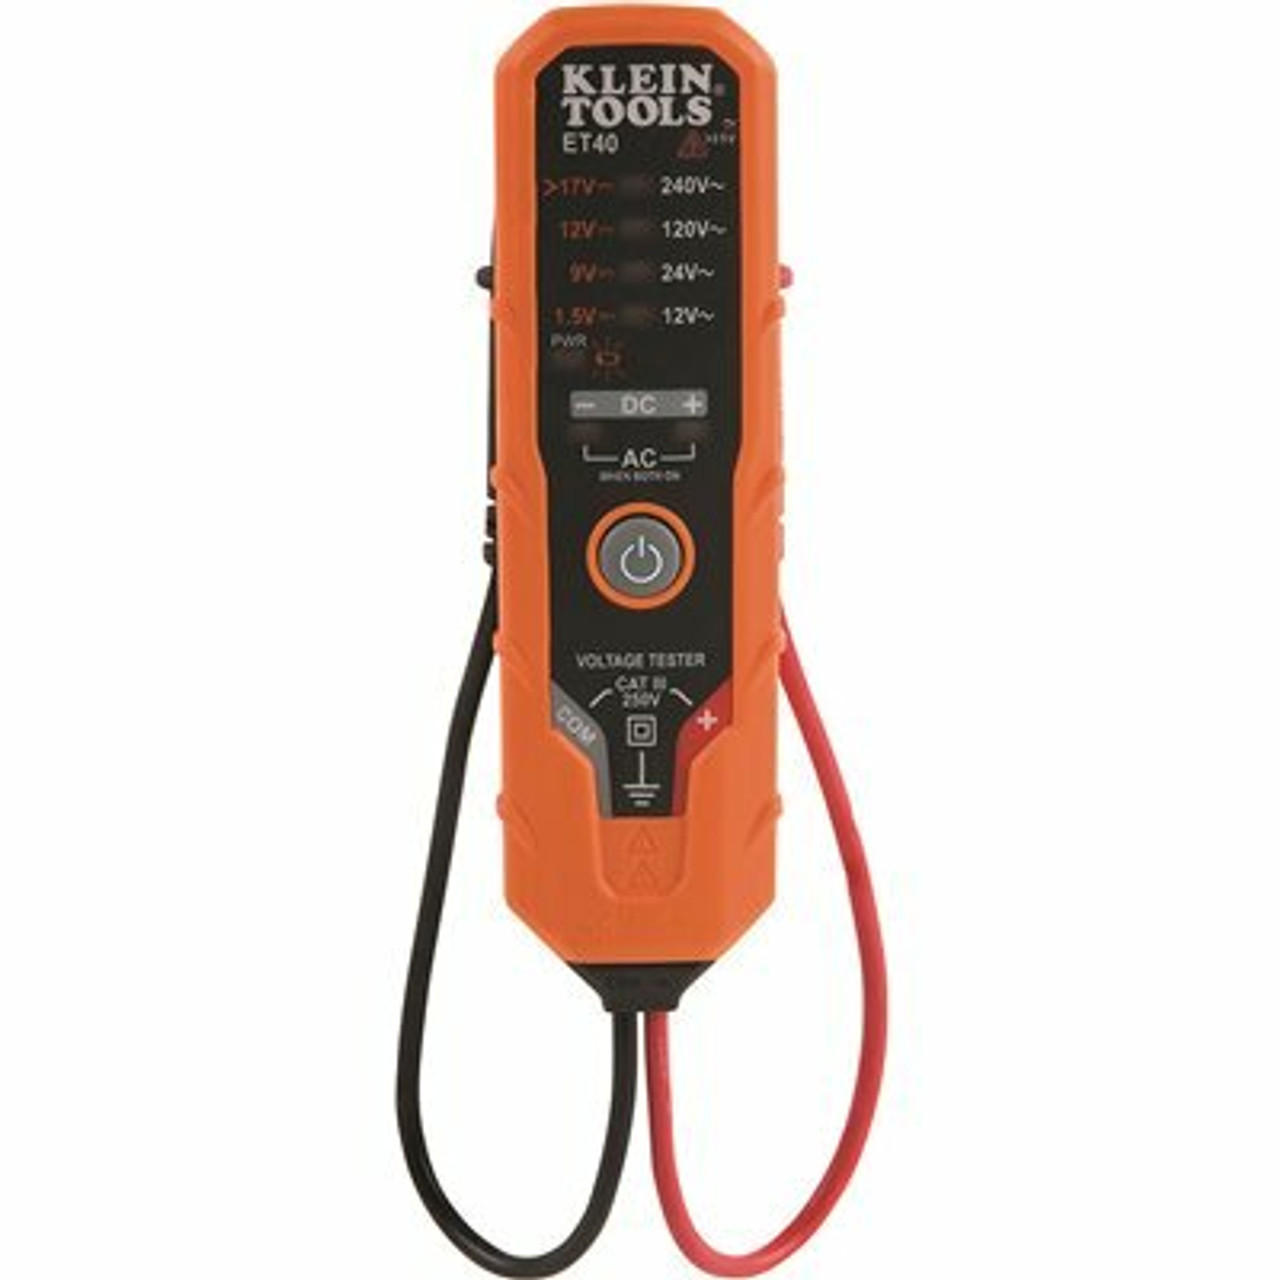 Klein Tools Electronic Ac/Dc Voltage Tester - 308822926